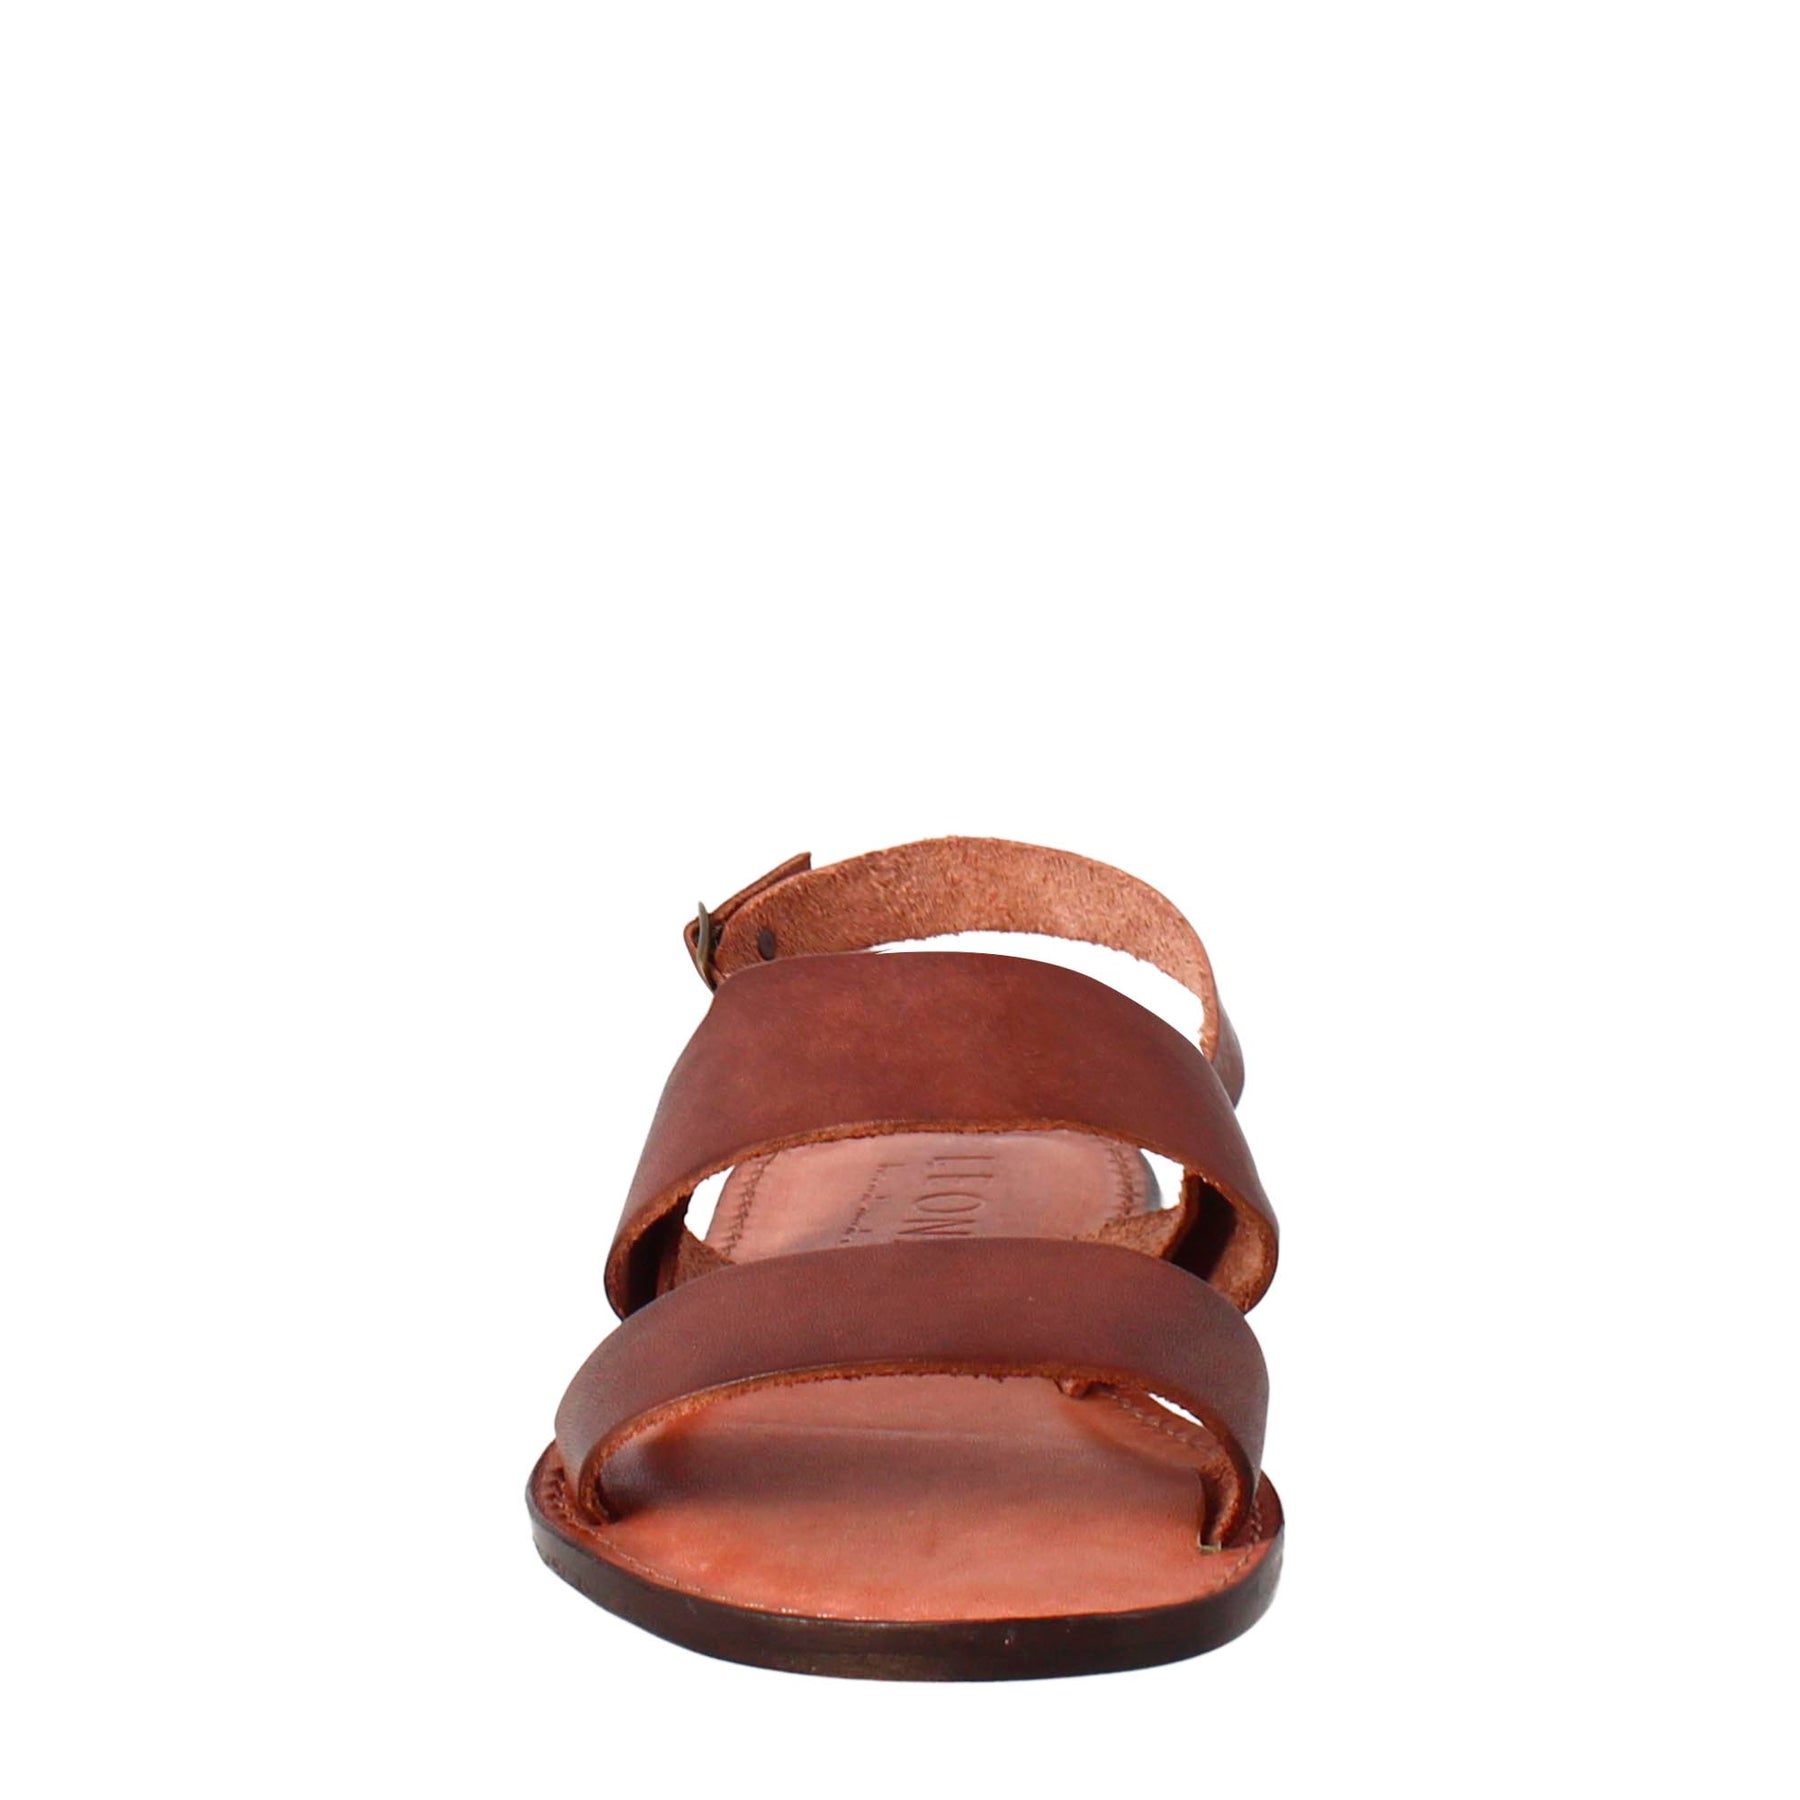 Women's Euphoria ancient Roman style brown leather sandals